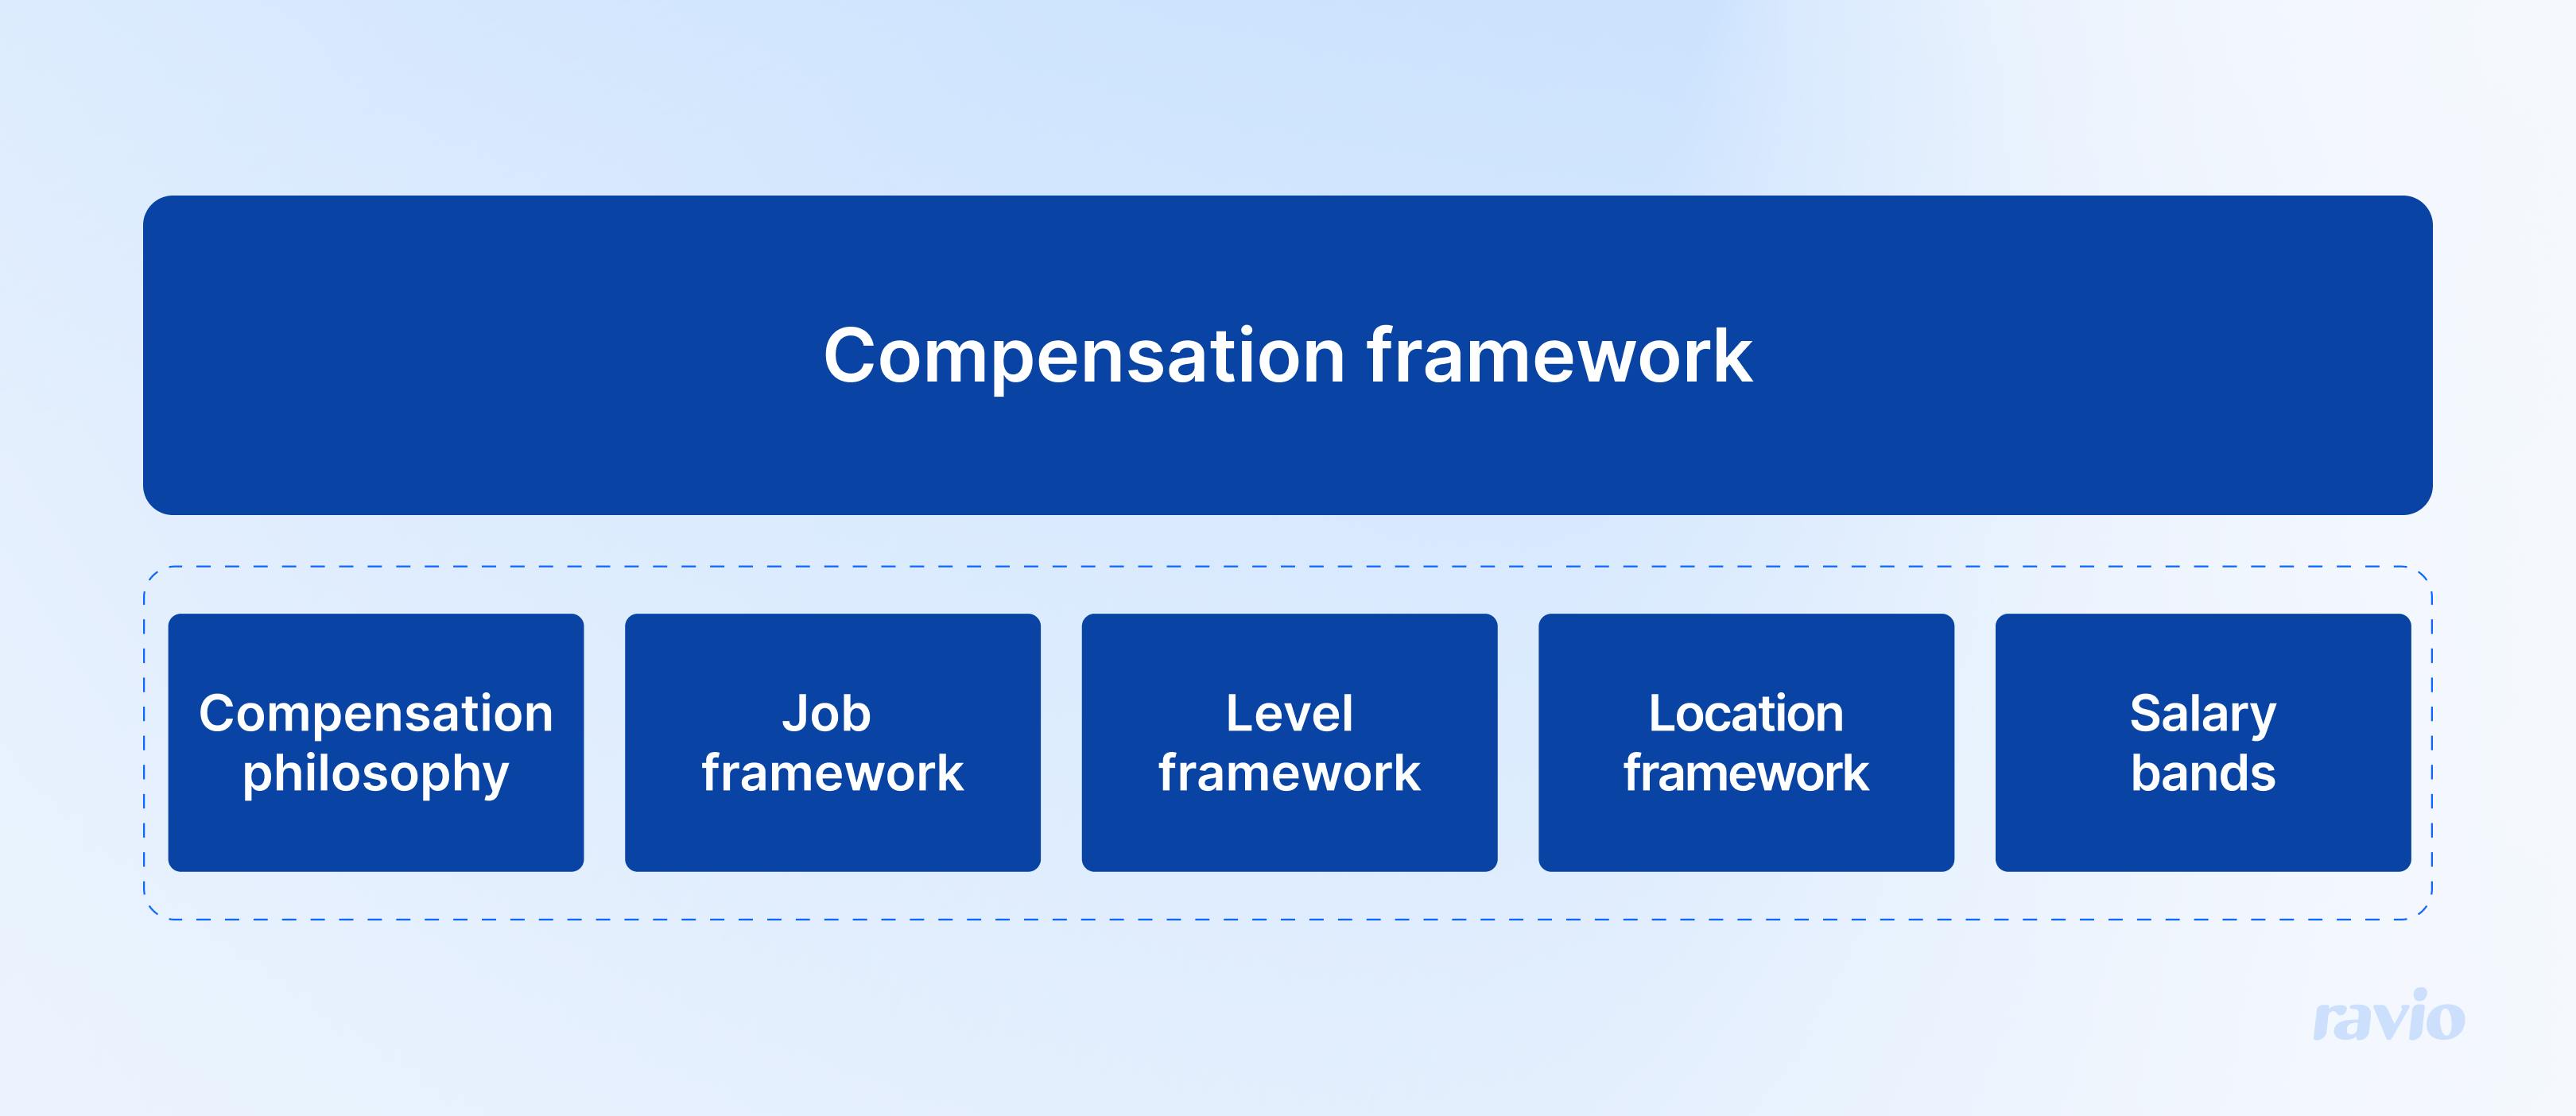 Image showing compensation framework, with six pillars beneath it: compensation philosophy, job framework, level framework, location framework, salary bands.